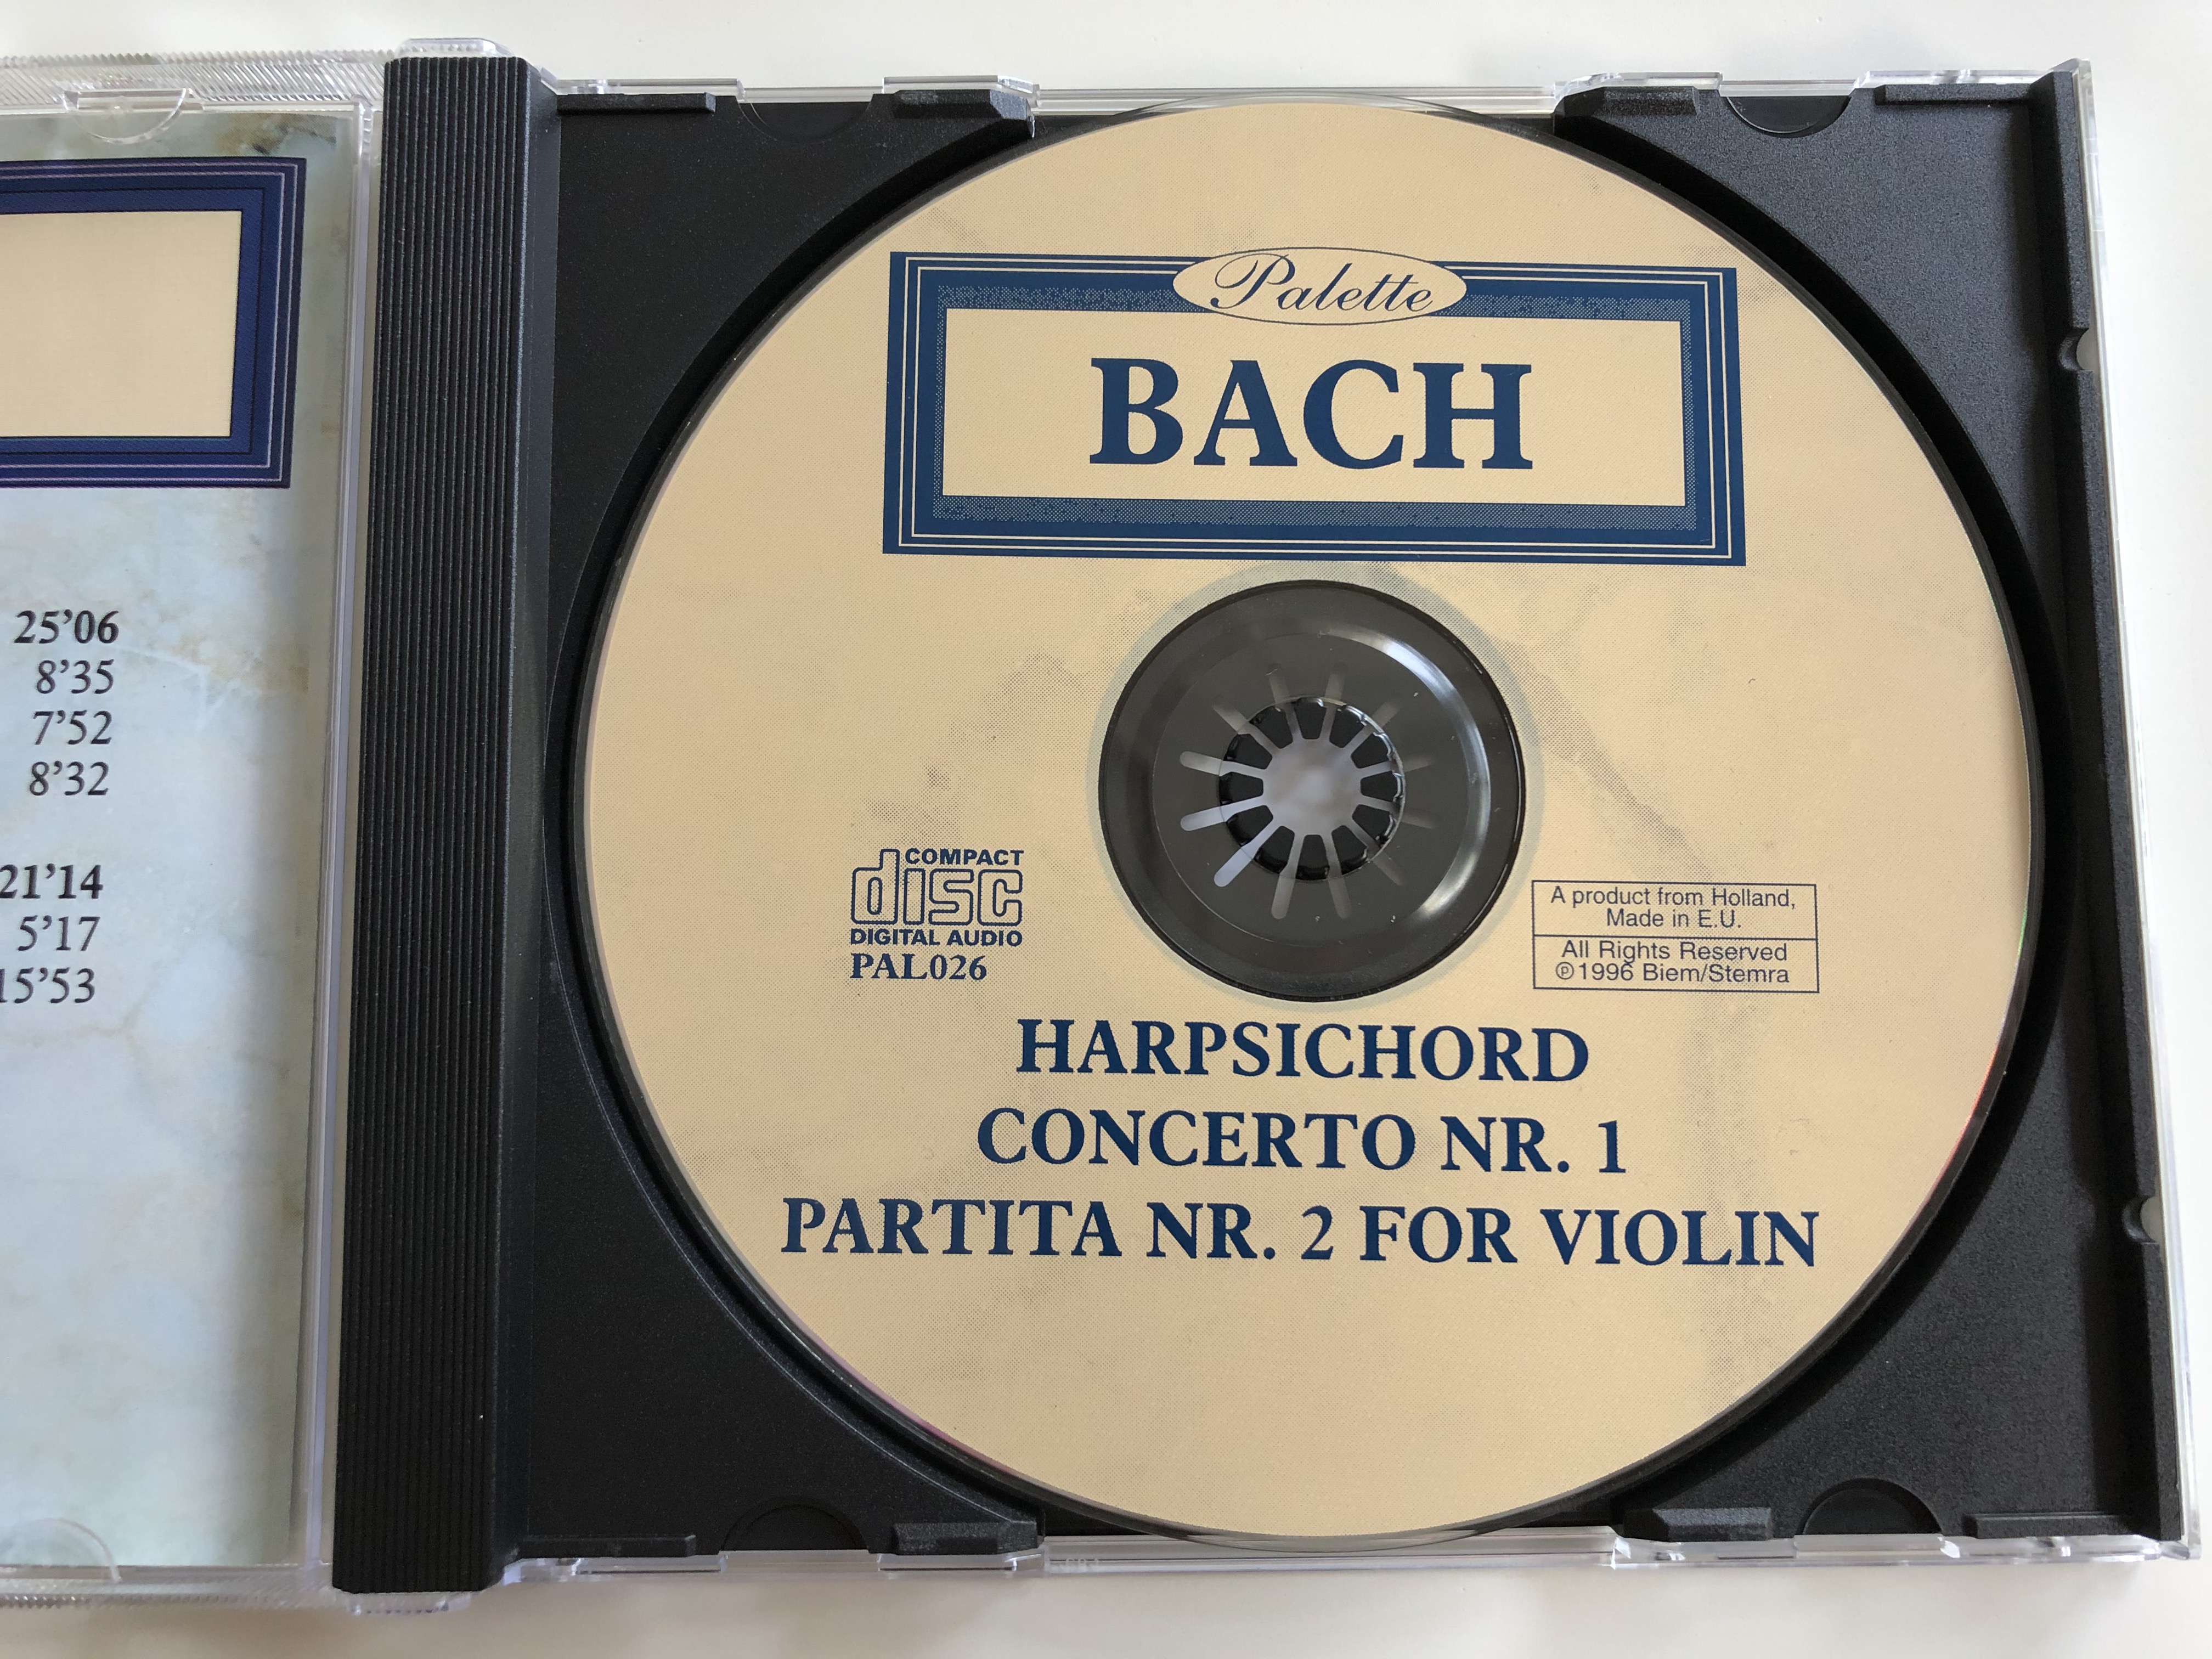 bach-harpsichord-concerto-nr.-1-partita-nr.-2-for-violin-palette-audio-cd-1996-pal026-3-.jpg